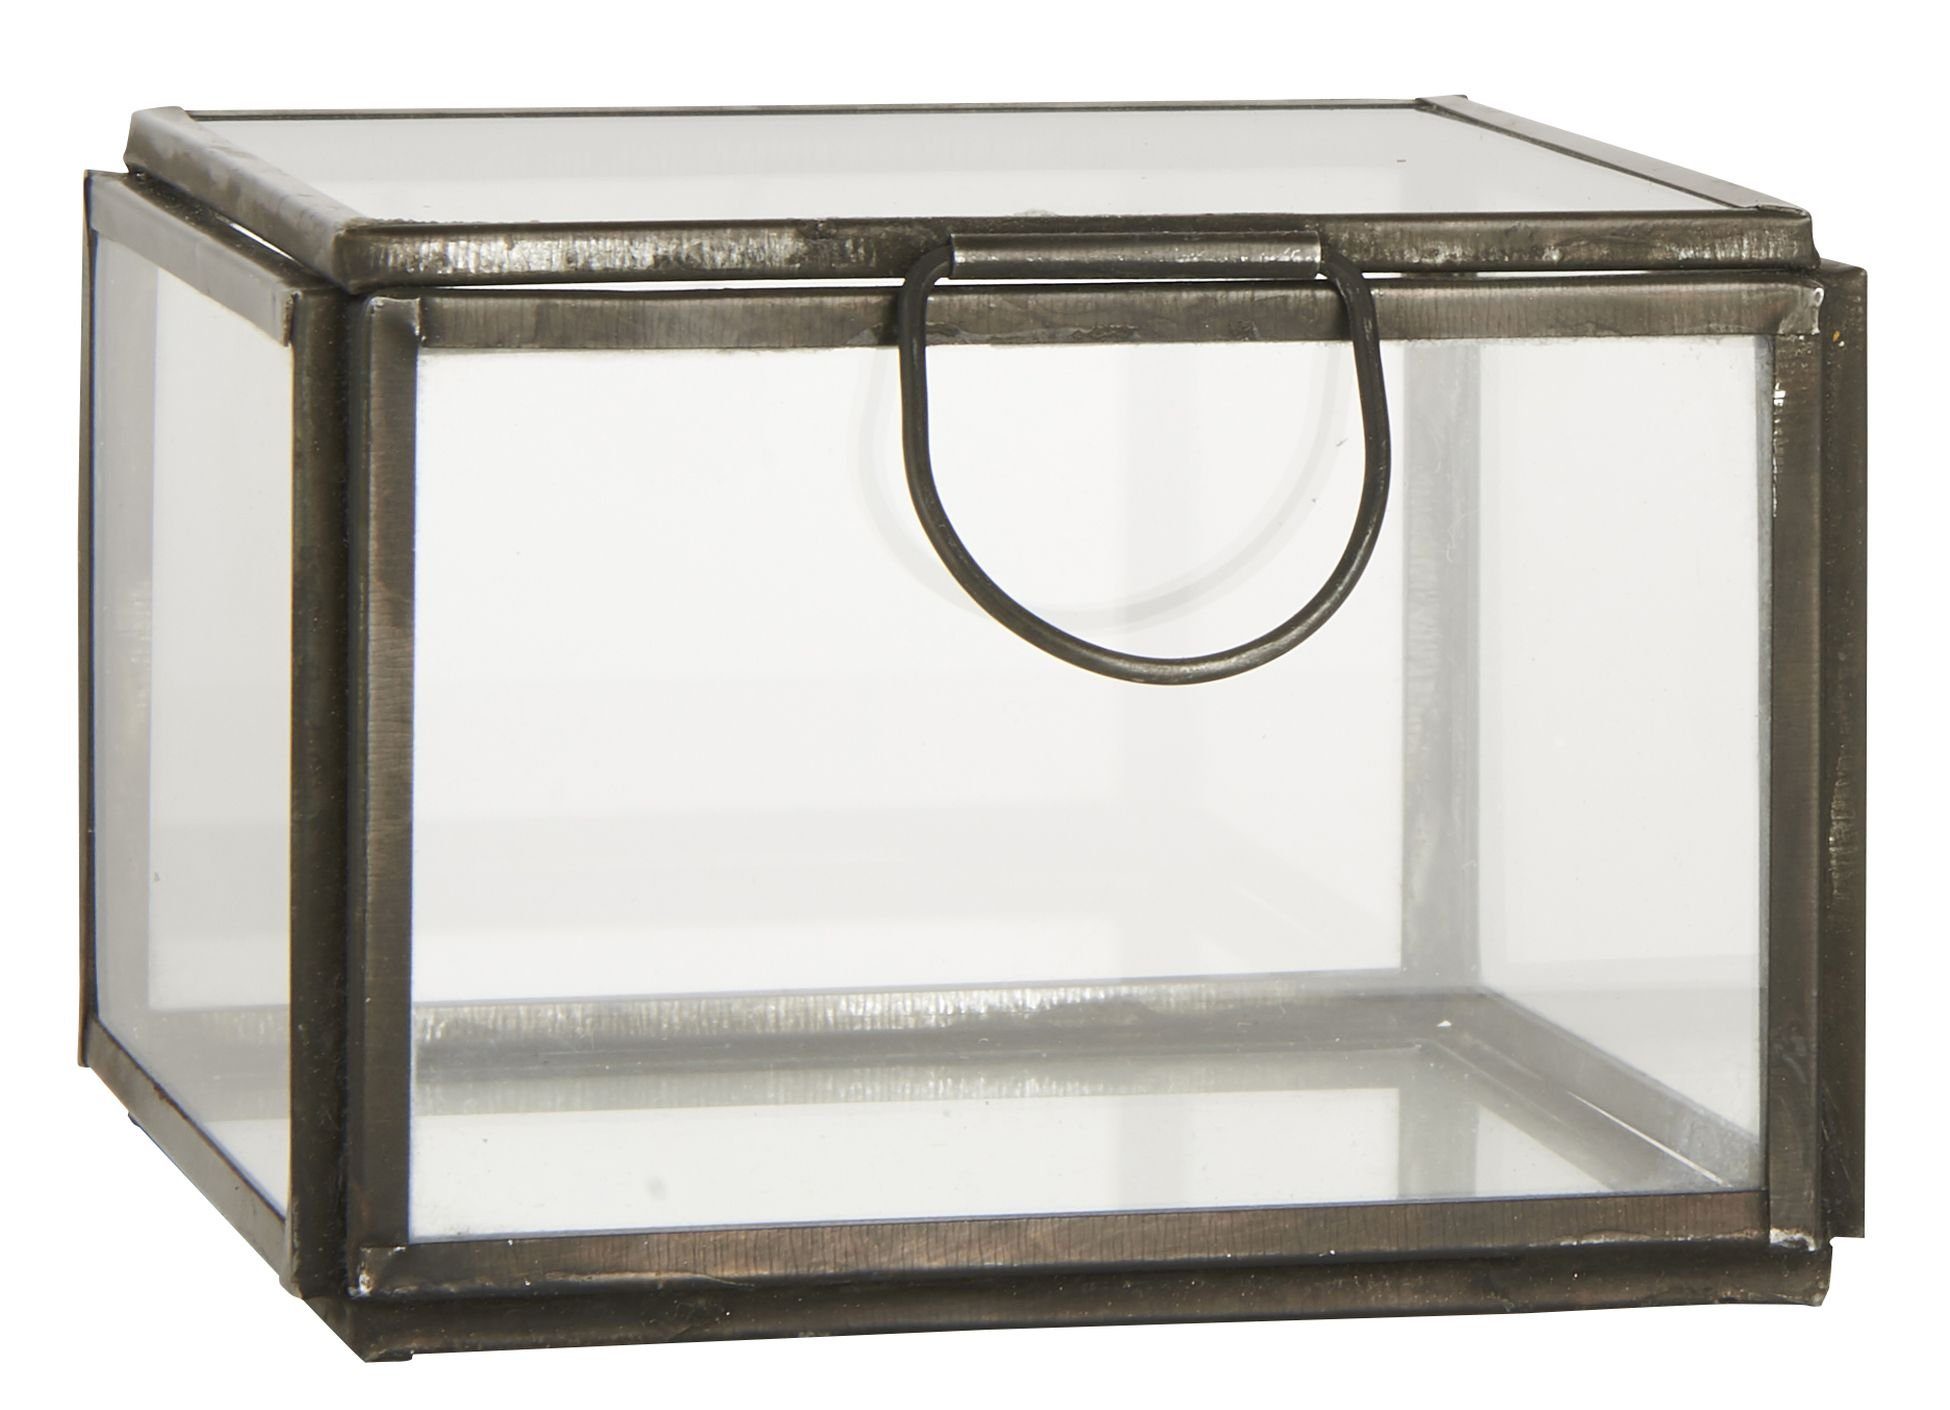 Ib Laursen Aufbewahrungsbox Ib Laursen - Glasbox Altum 9685-25 Utensilienbox Glas Factory